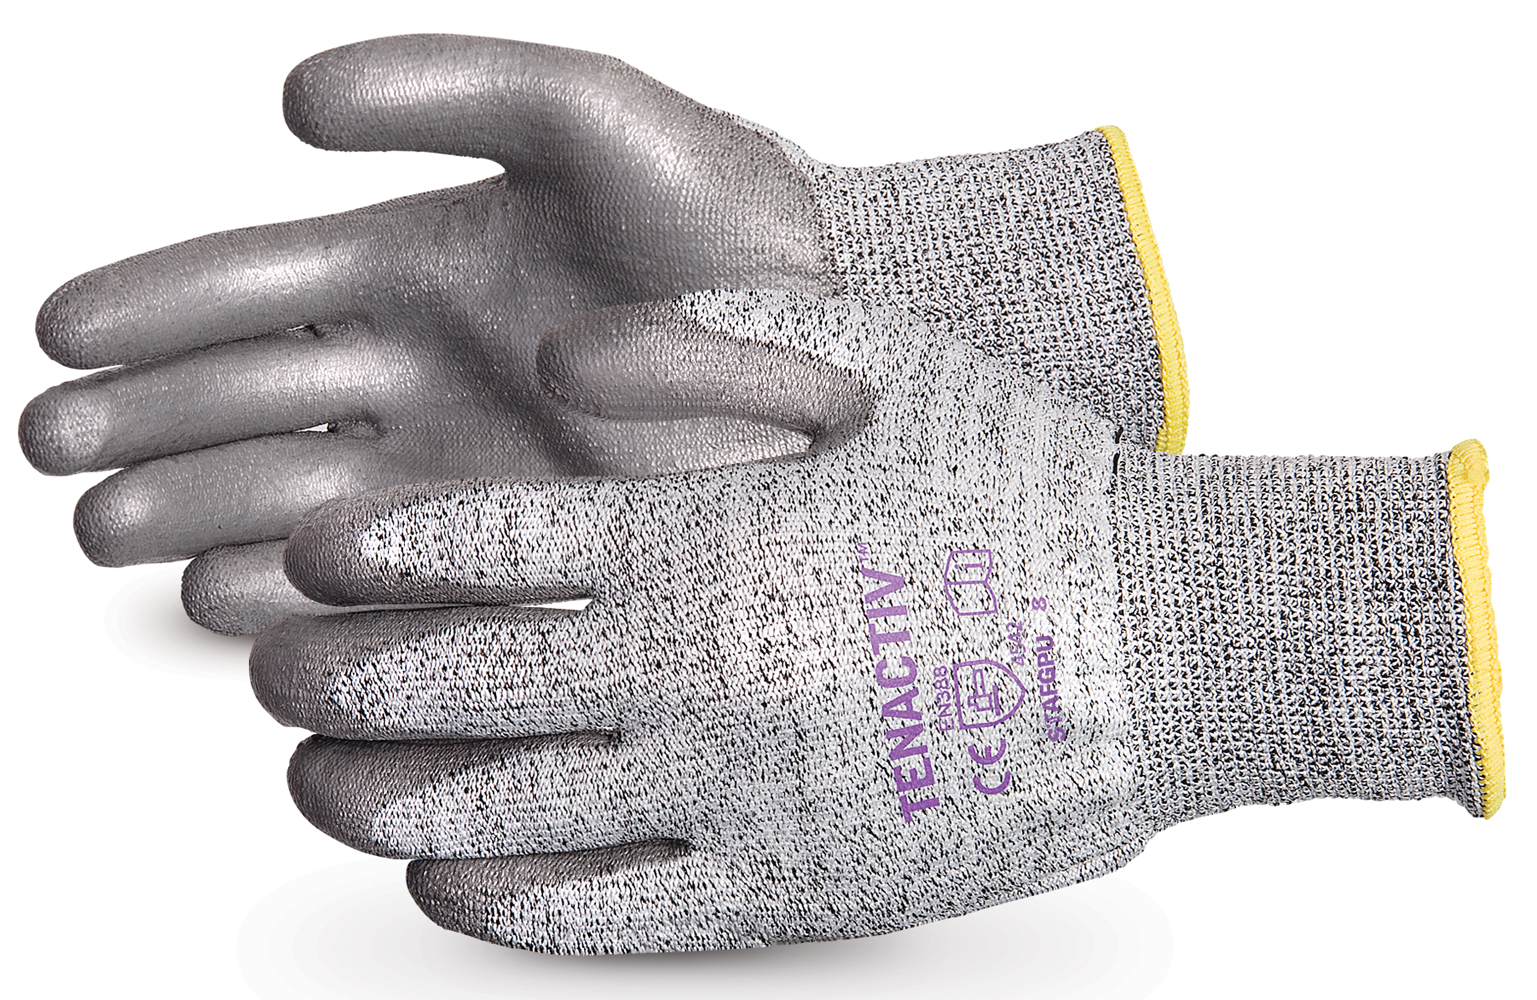 Superiorglove SUSTAFGPU TenActiv Cut-Resistant Composite Knit Glove-0